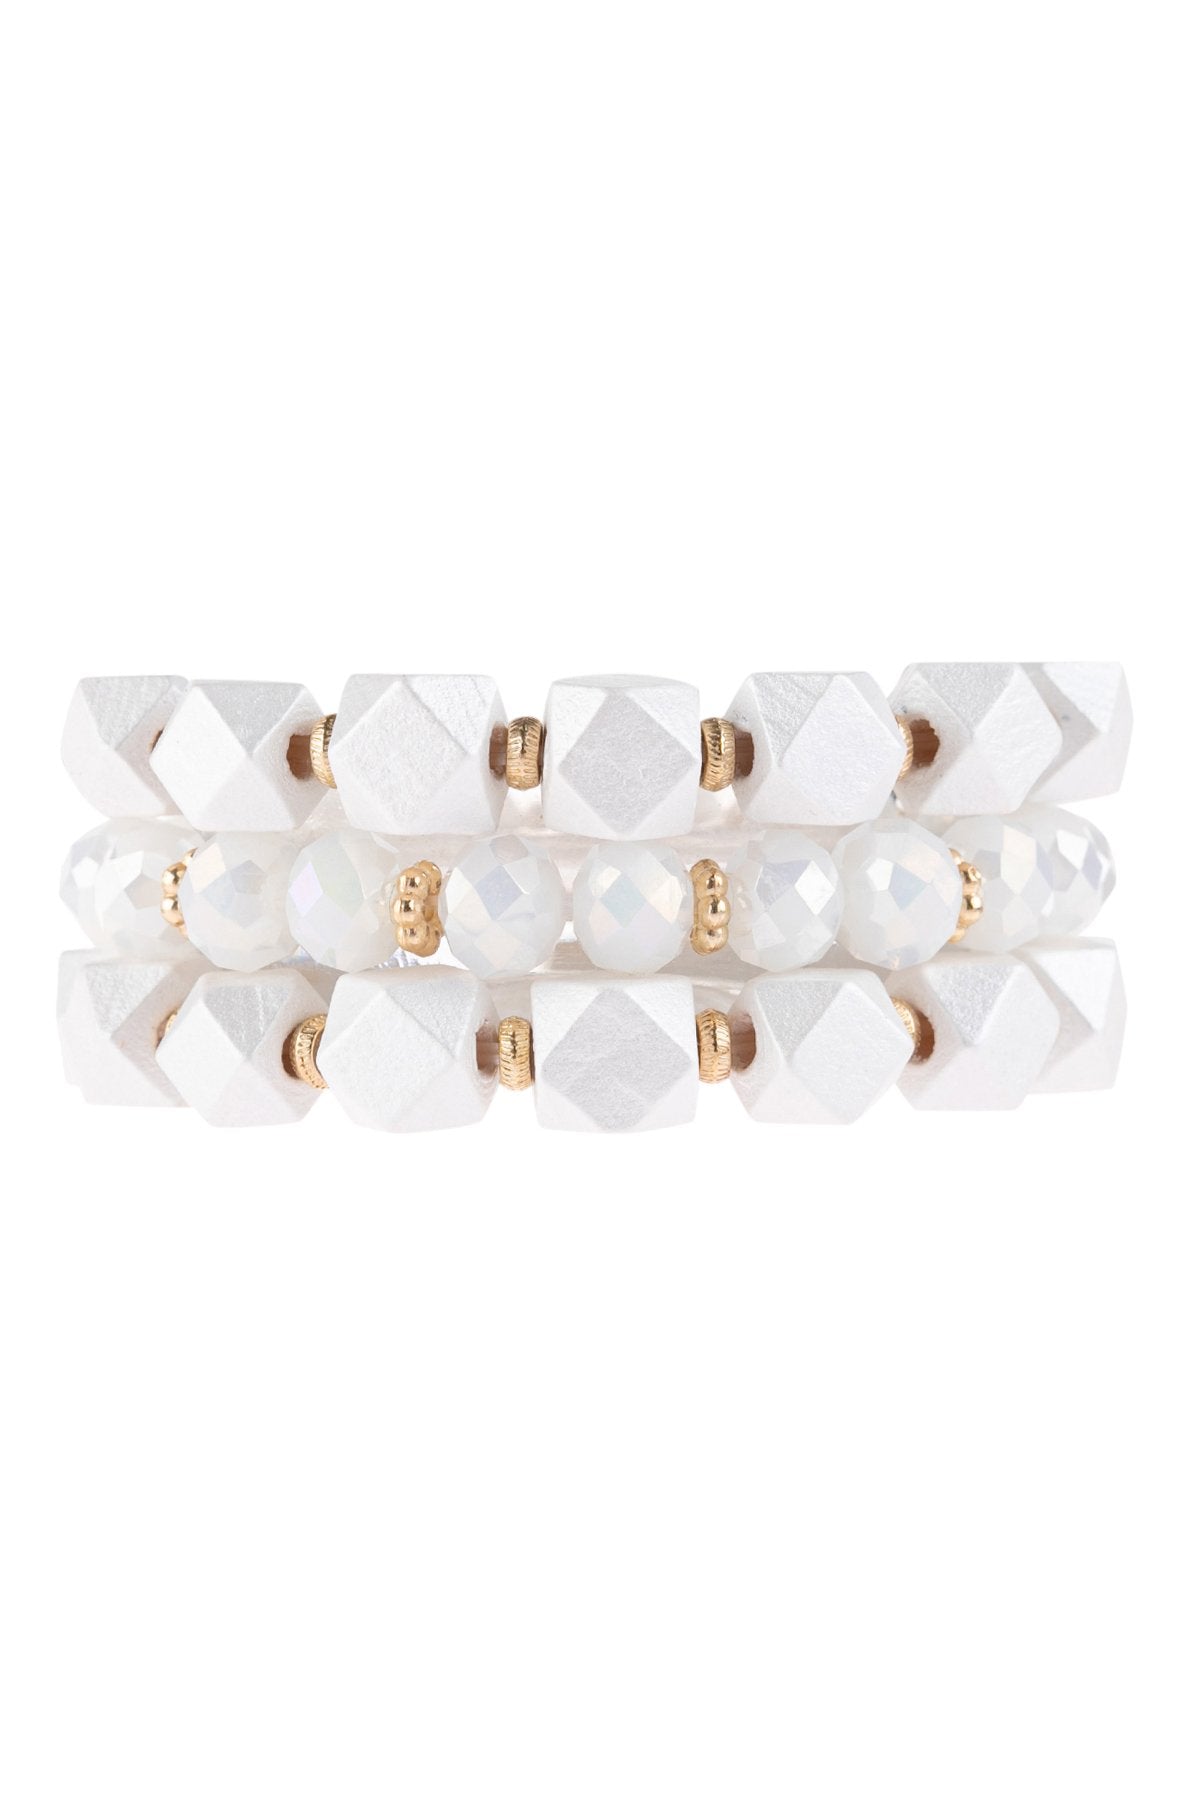 Hdb3226 - Three Lines Beads Bracelet